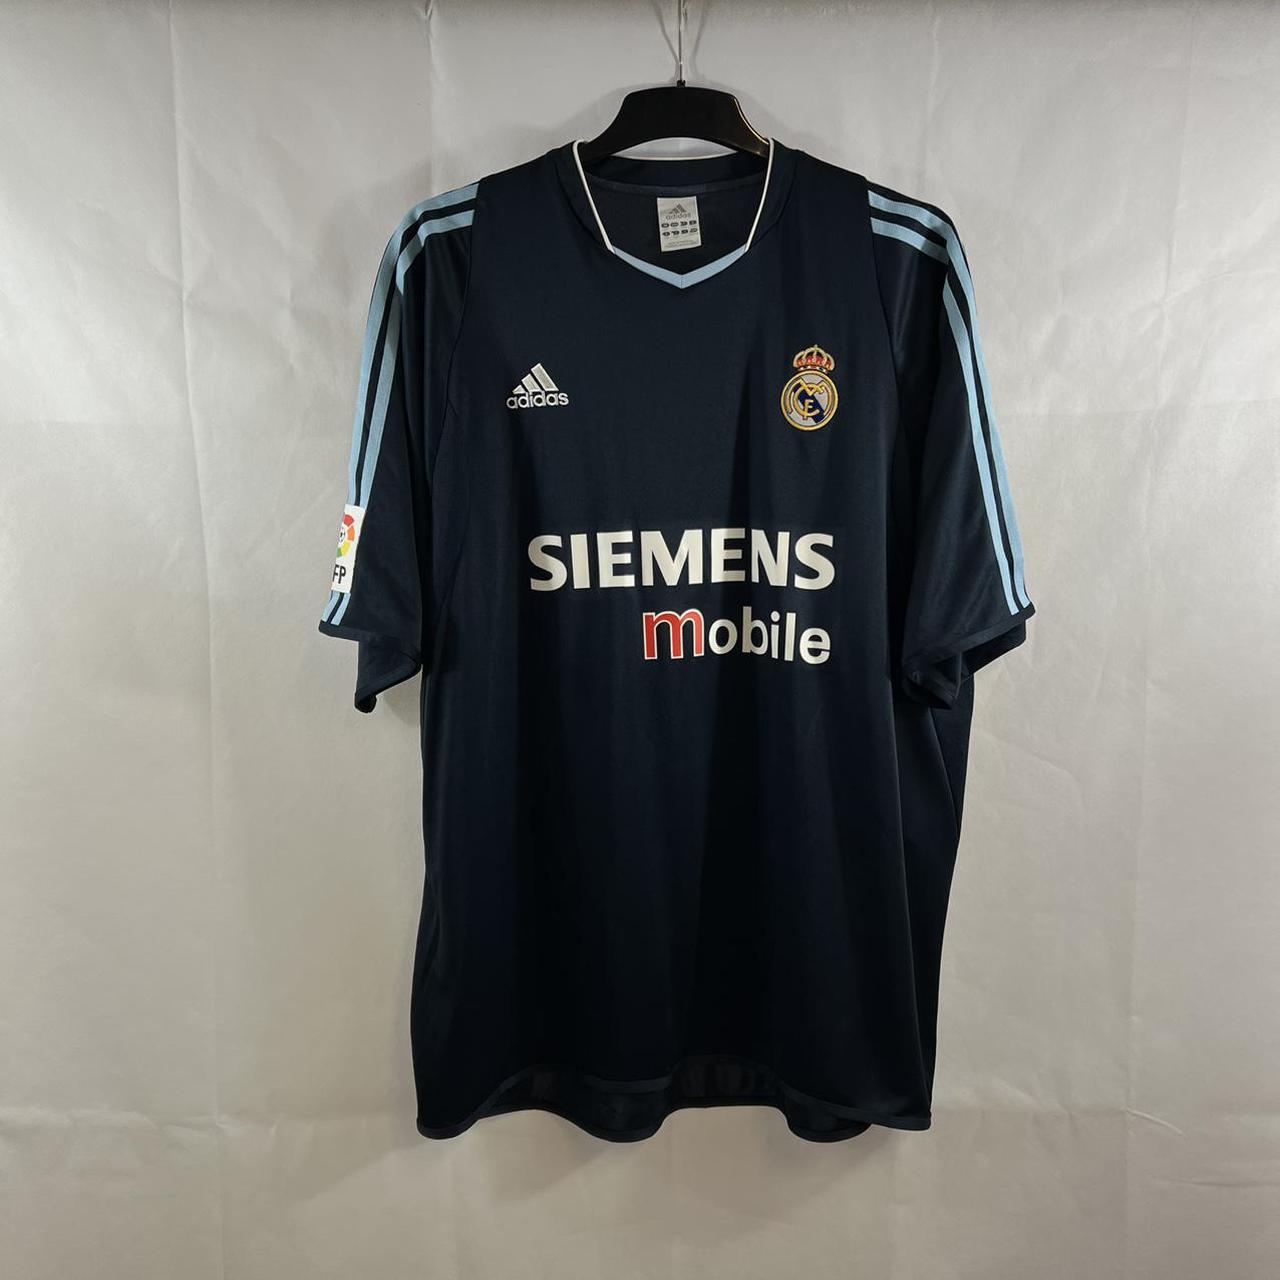 Real Madrid Away Football Shirt 2003/04 Adults XXL... - Depop